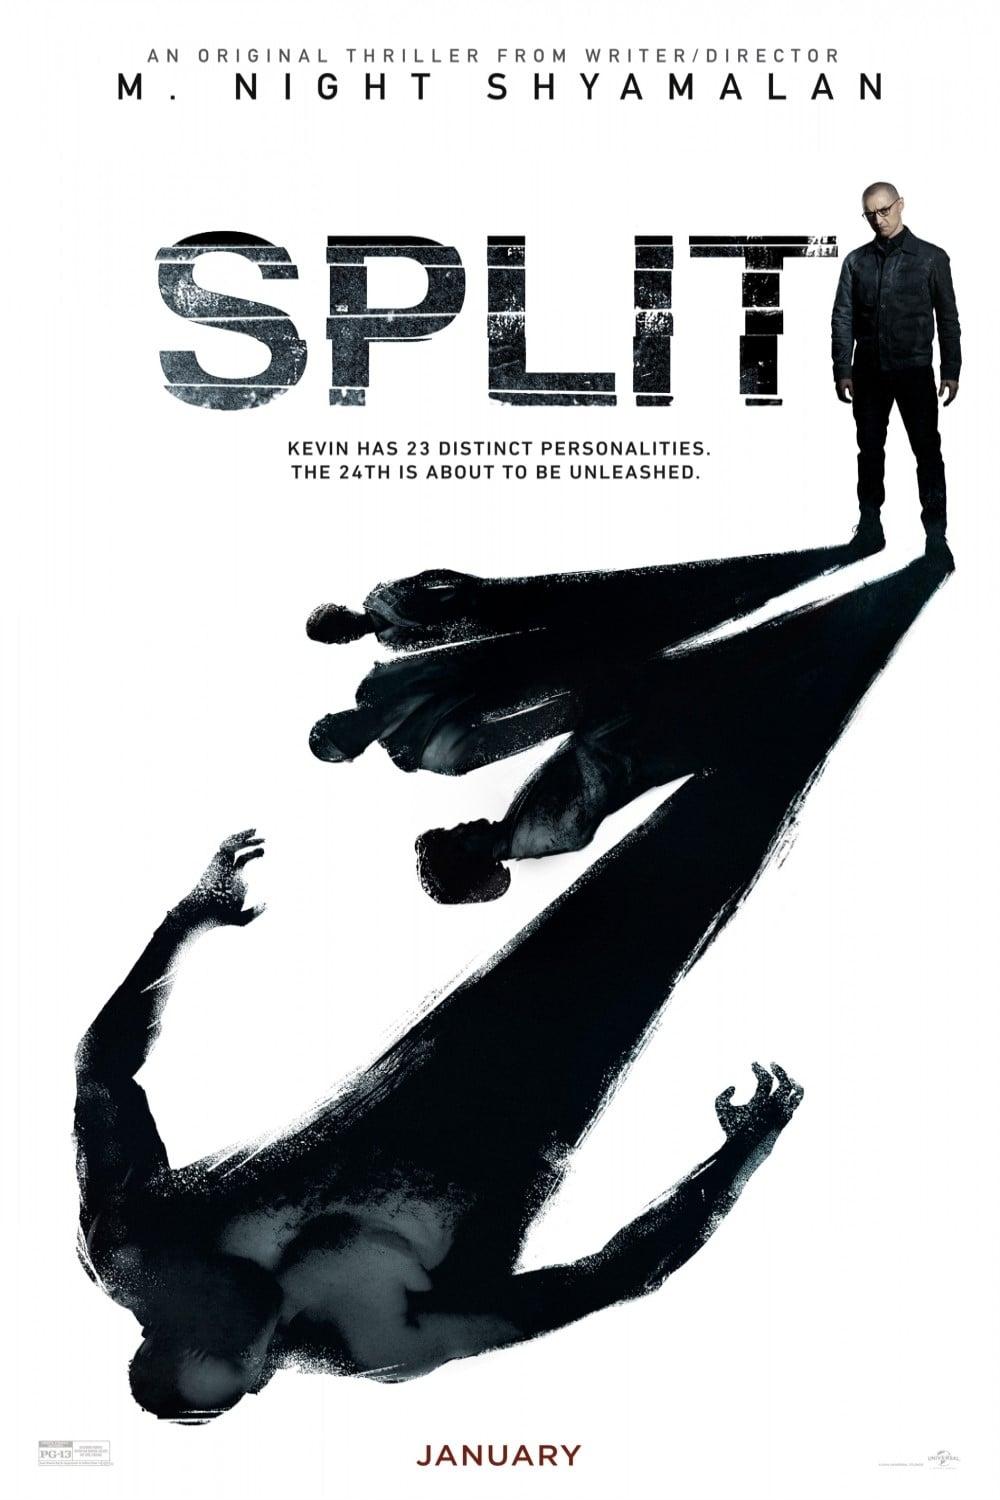 The Making of 'Split' poster